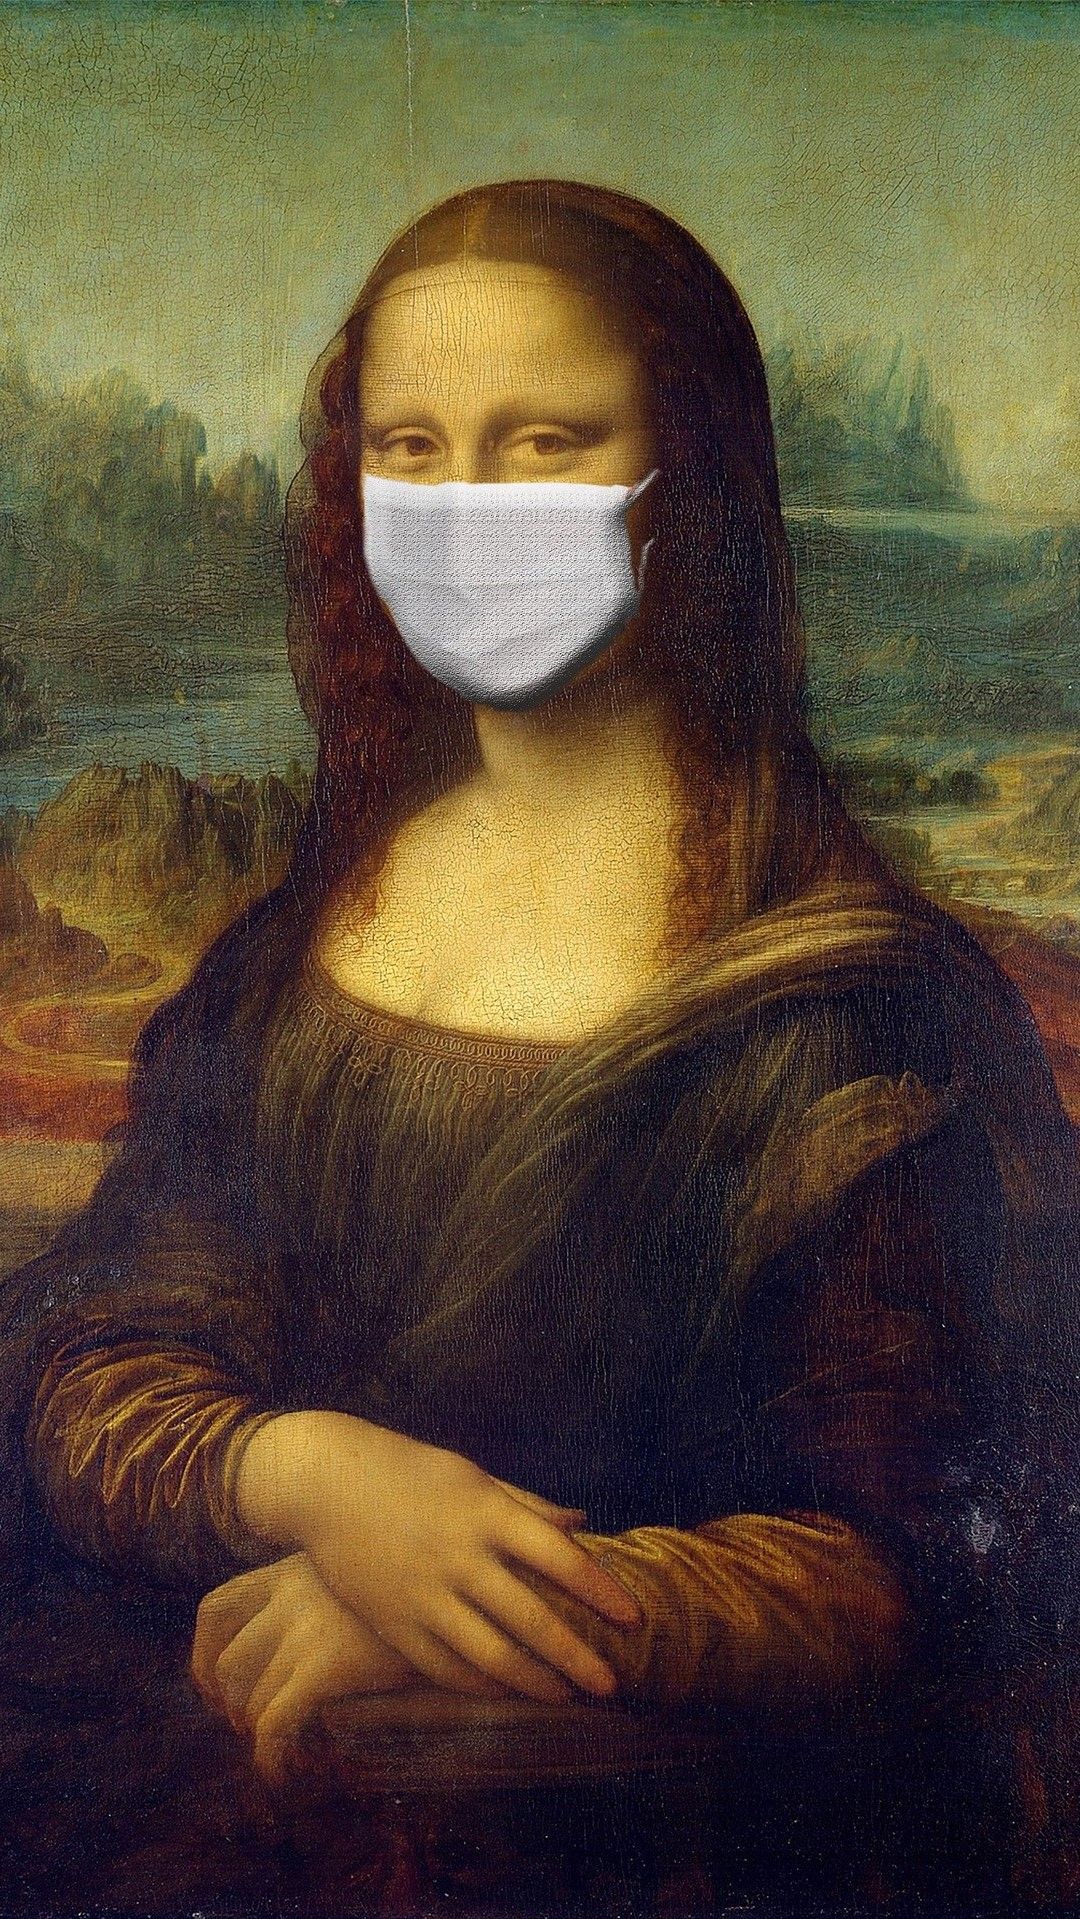 Mona Lisa with mask covid19